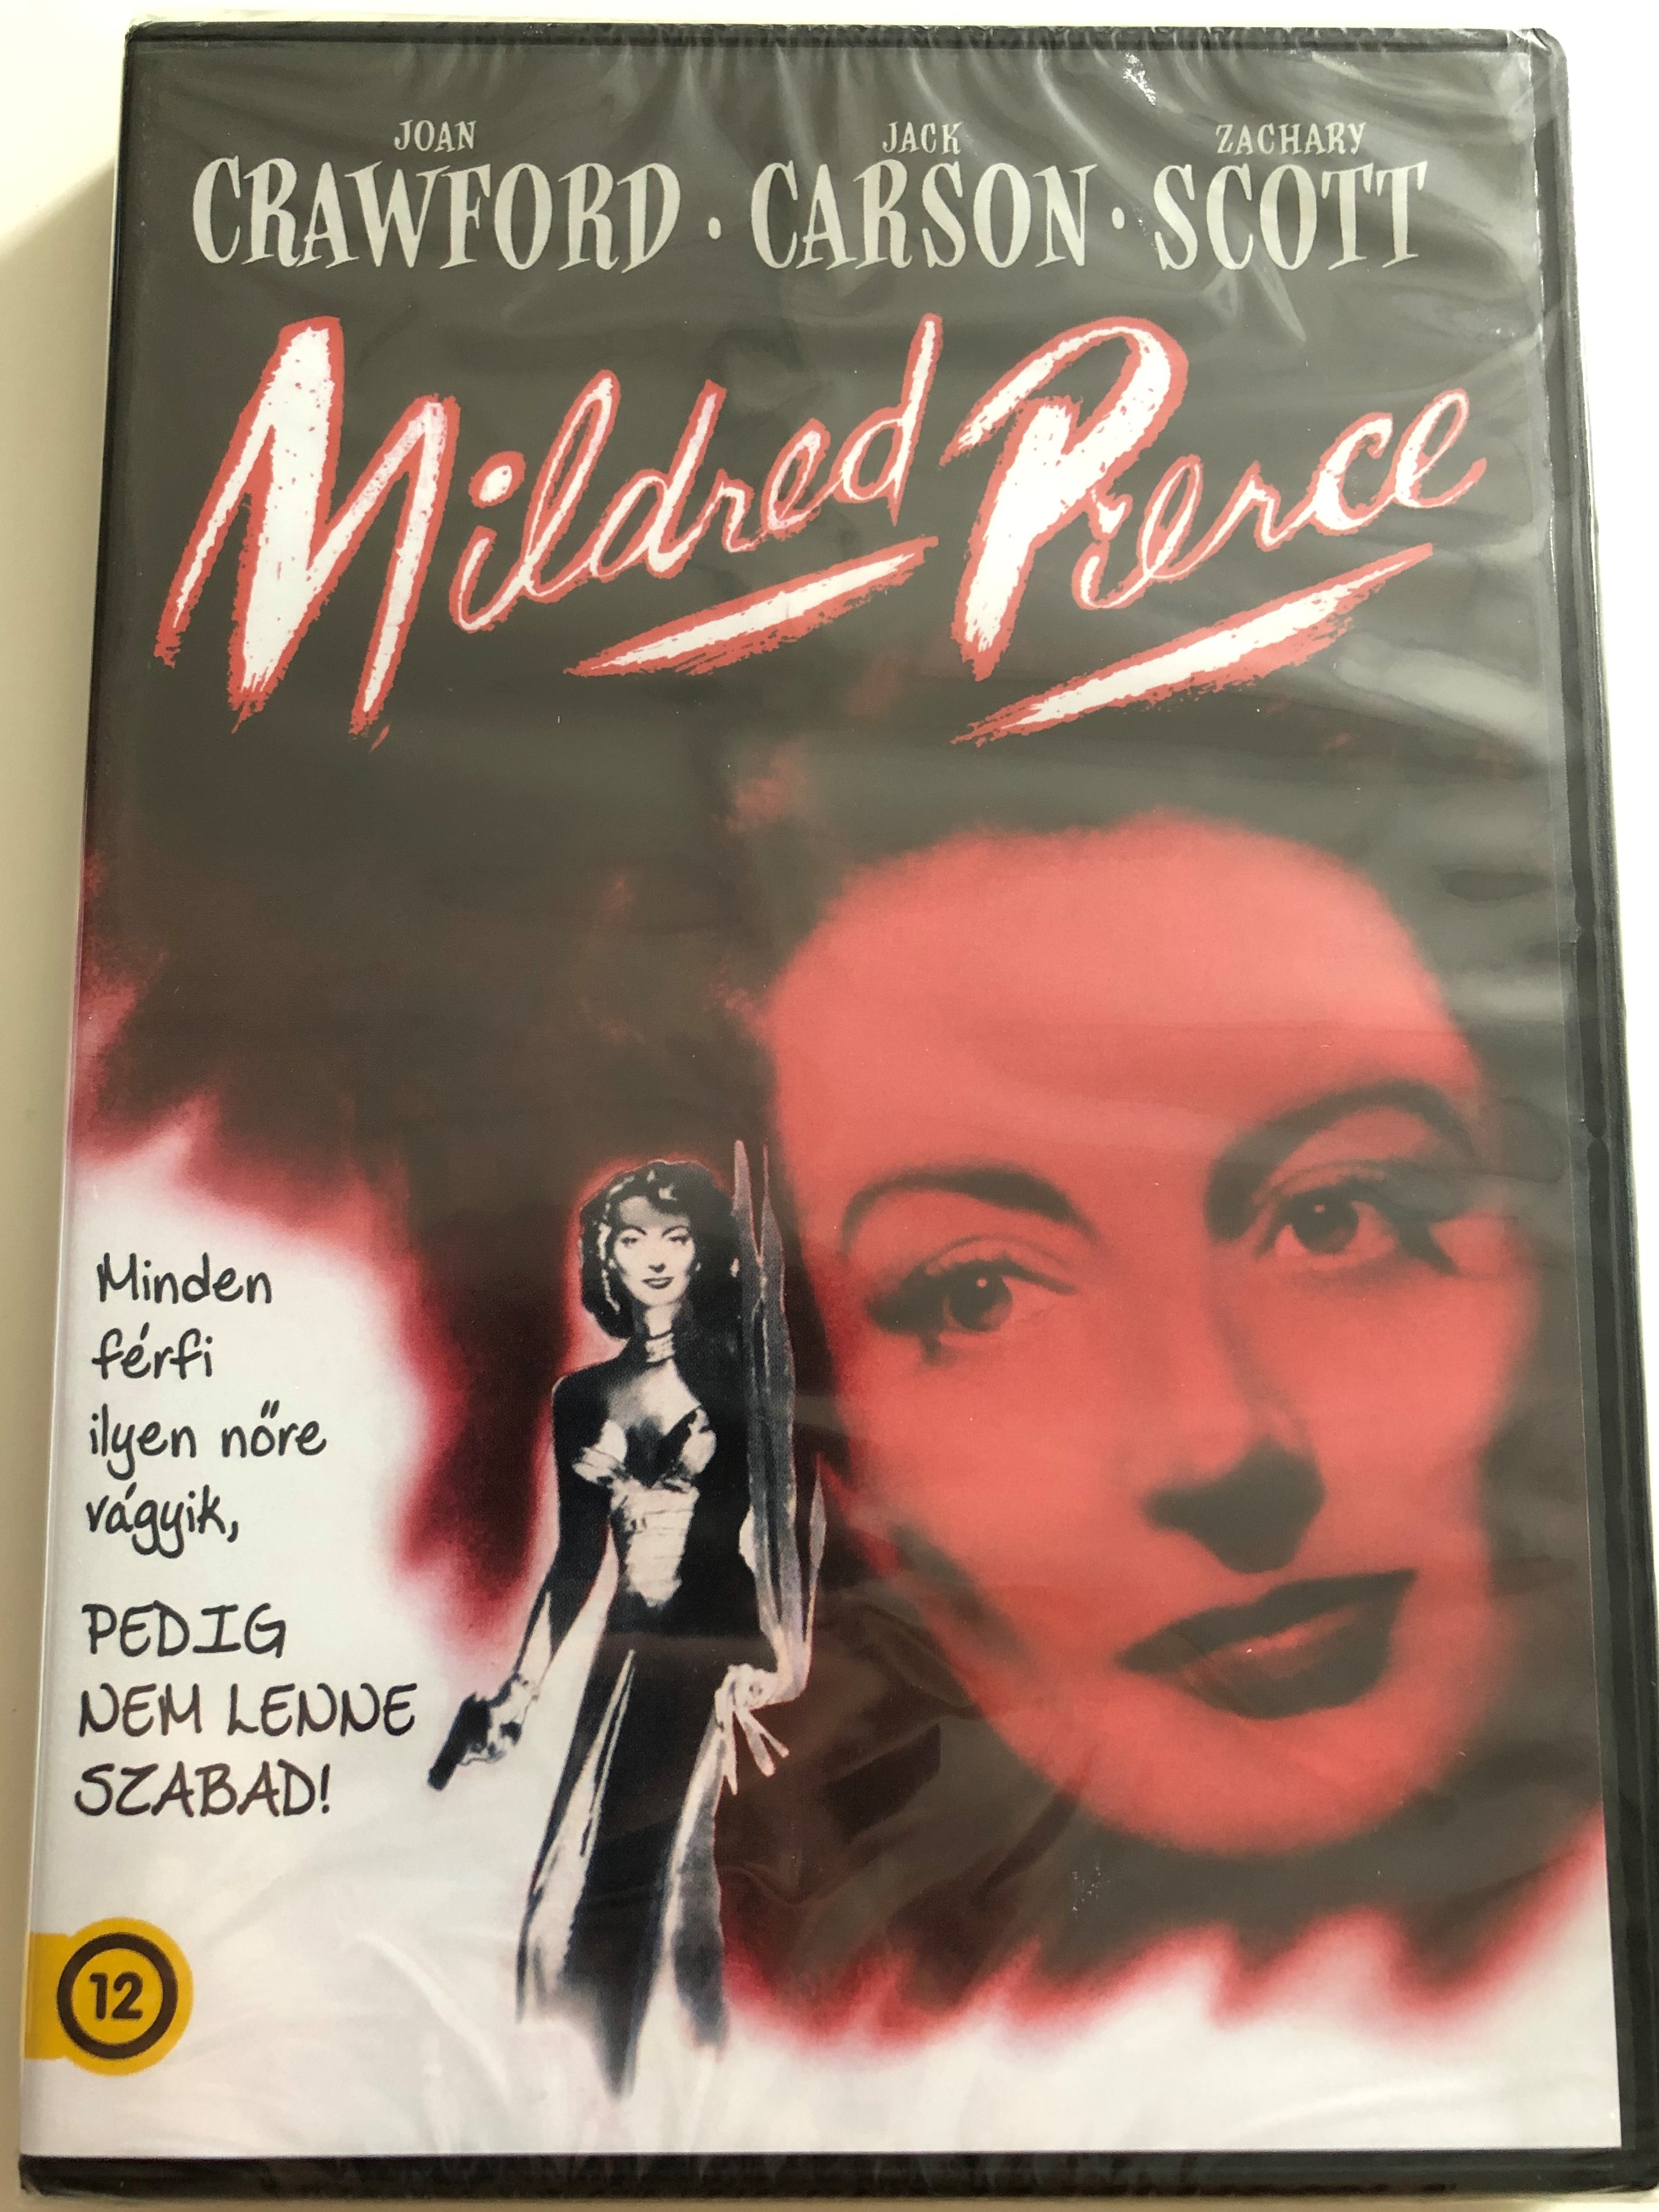 mildred-pierce-dvd-1945-directed-by-michael-curtiz-starring-joan-crawford-jack-carson-zachary-scott-american-film-noir-crime-drama-1-.jpg